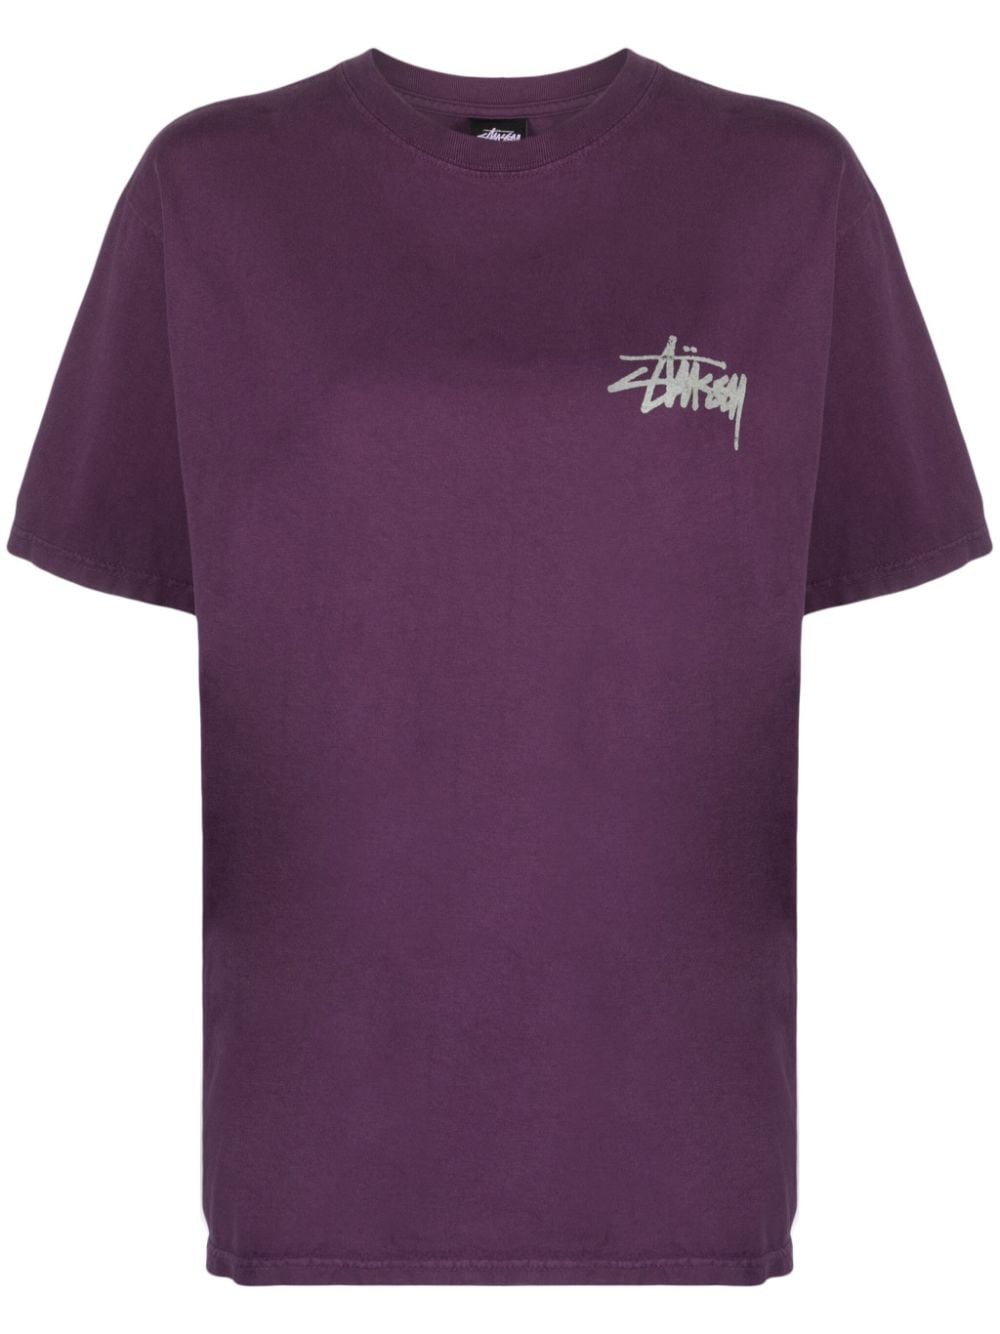 Stussy STUSSY- Printed Cotton T-shirt